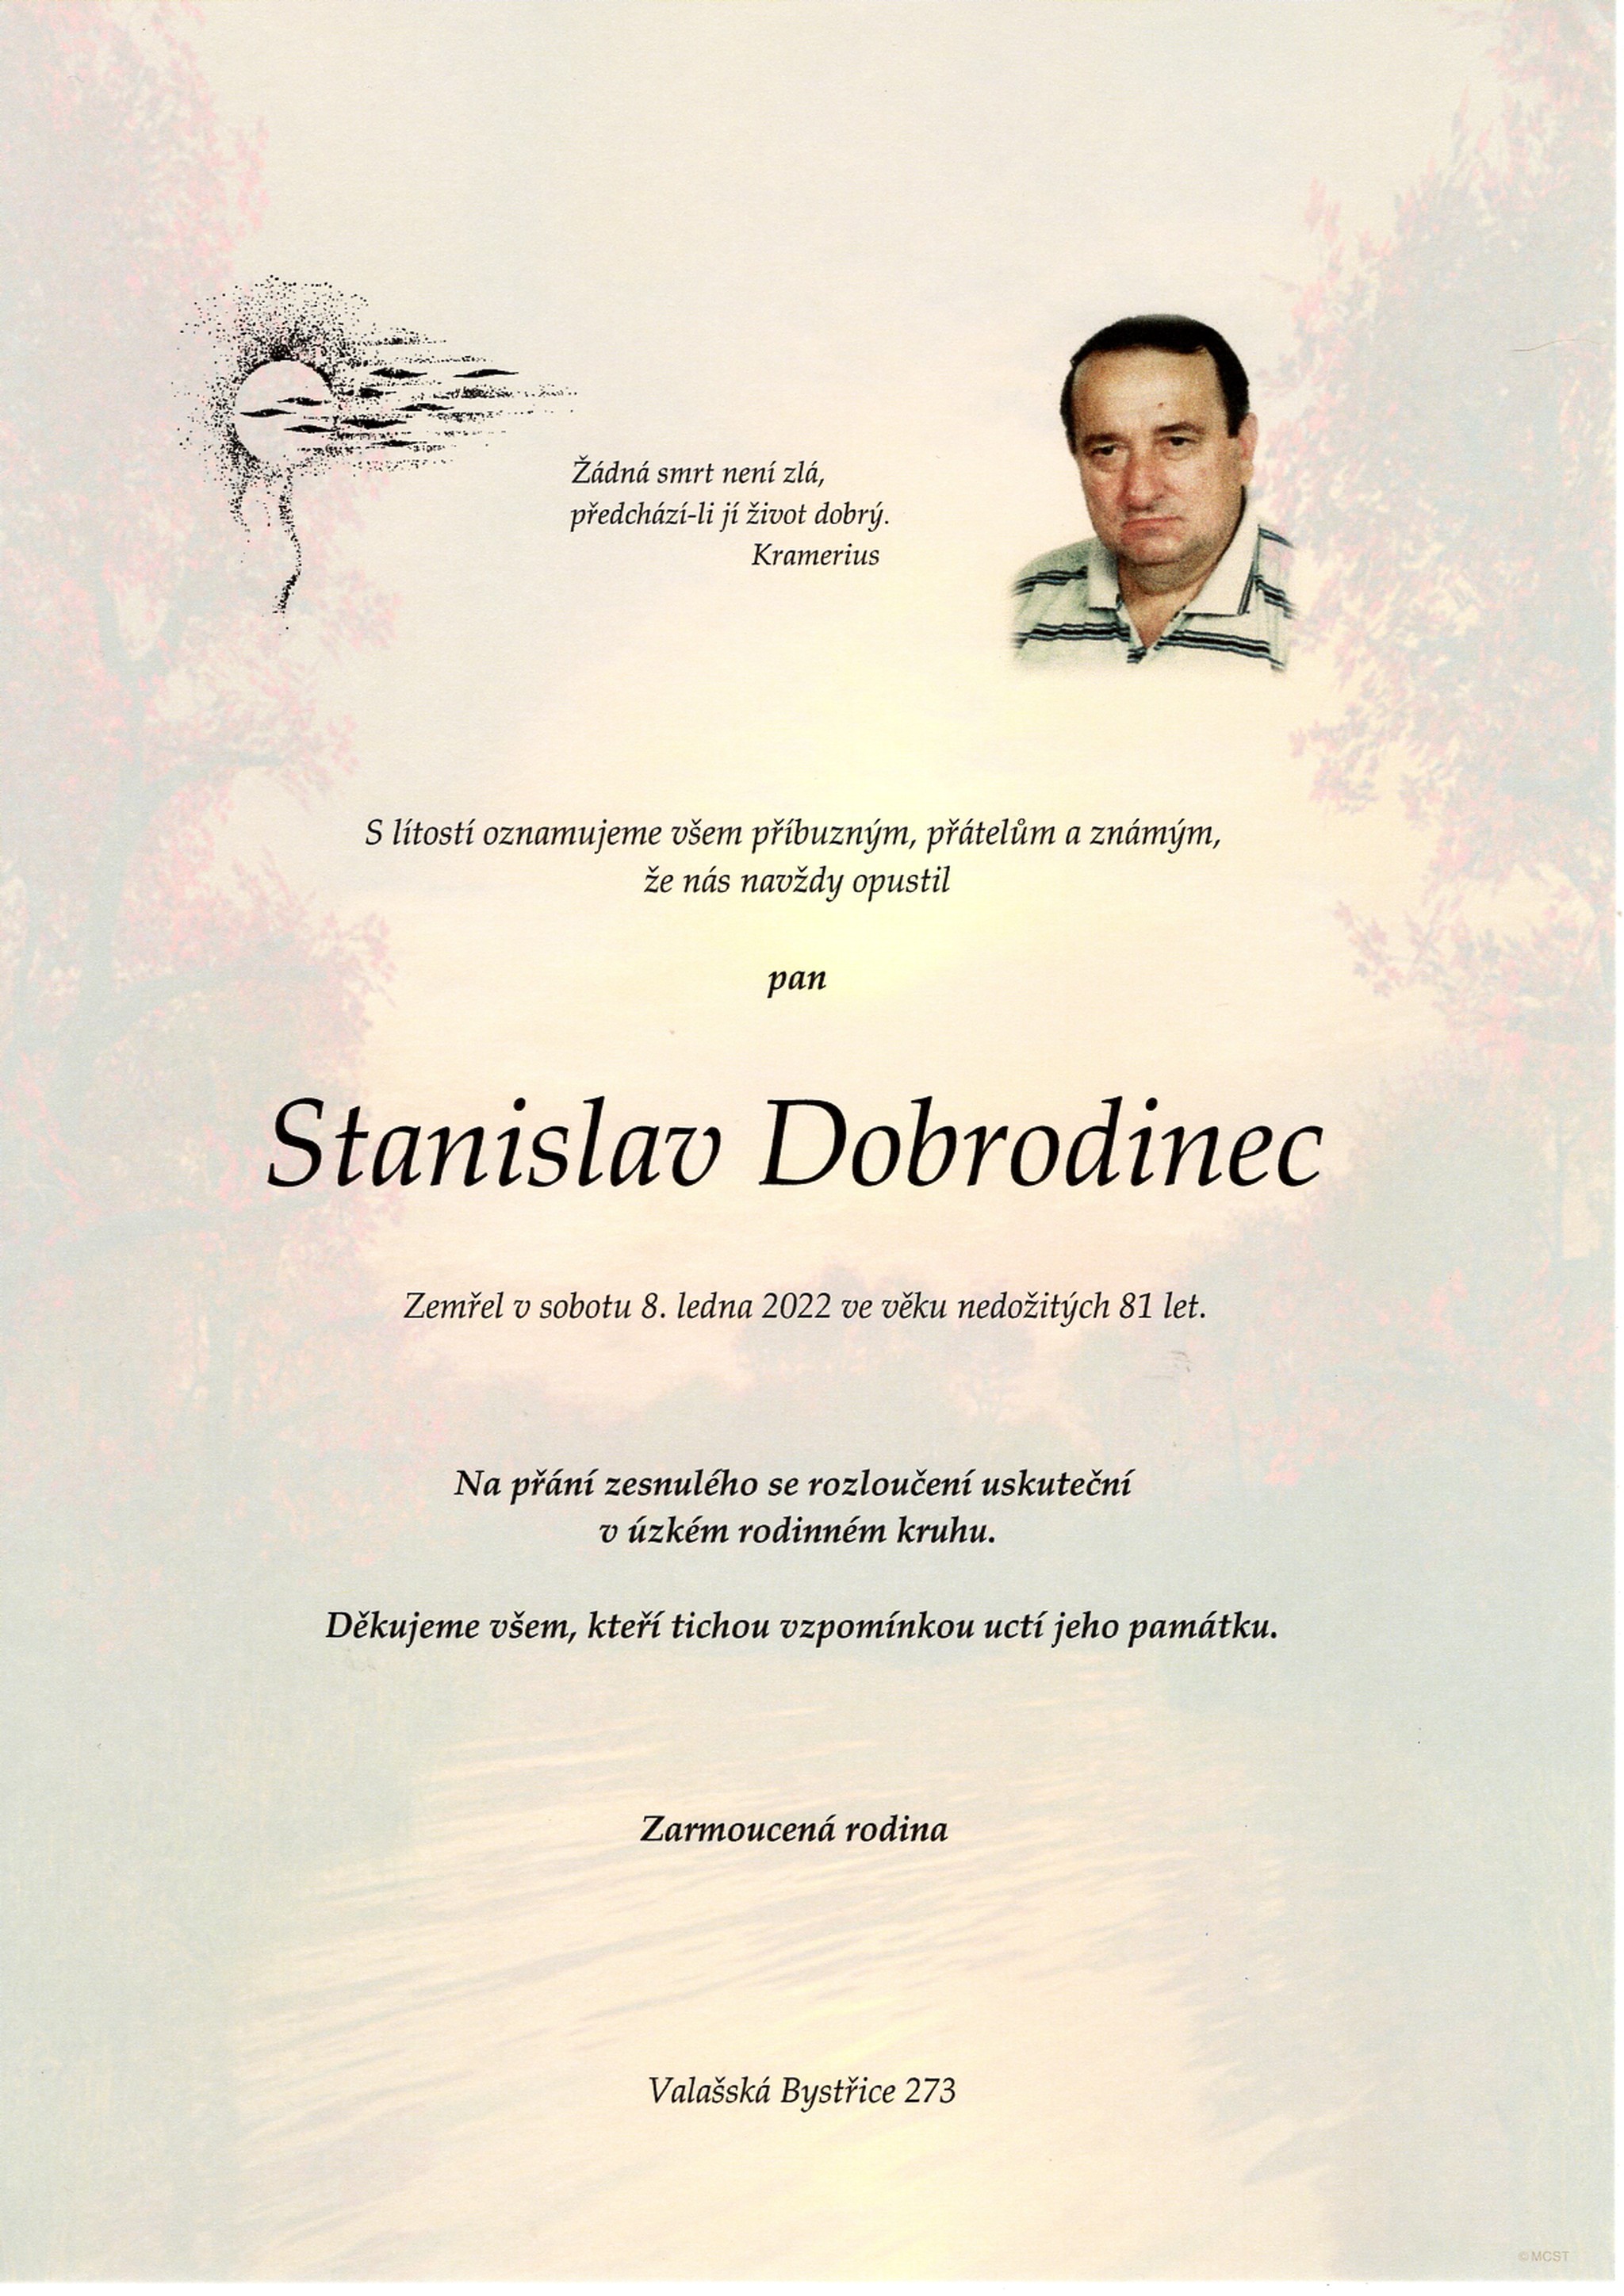 Stanislav Dobrodinec